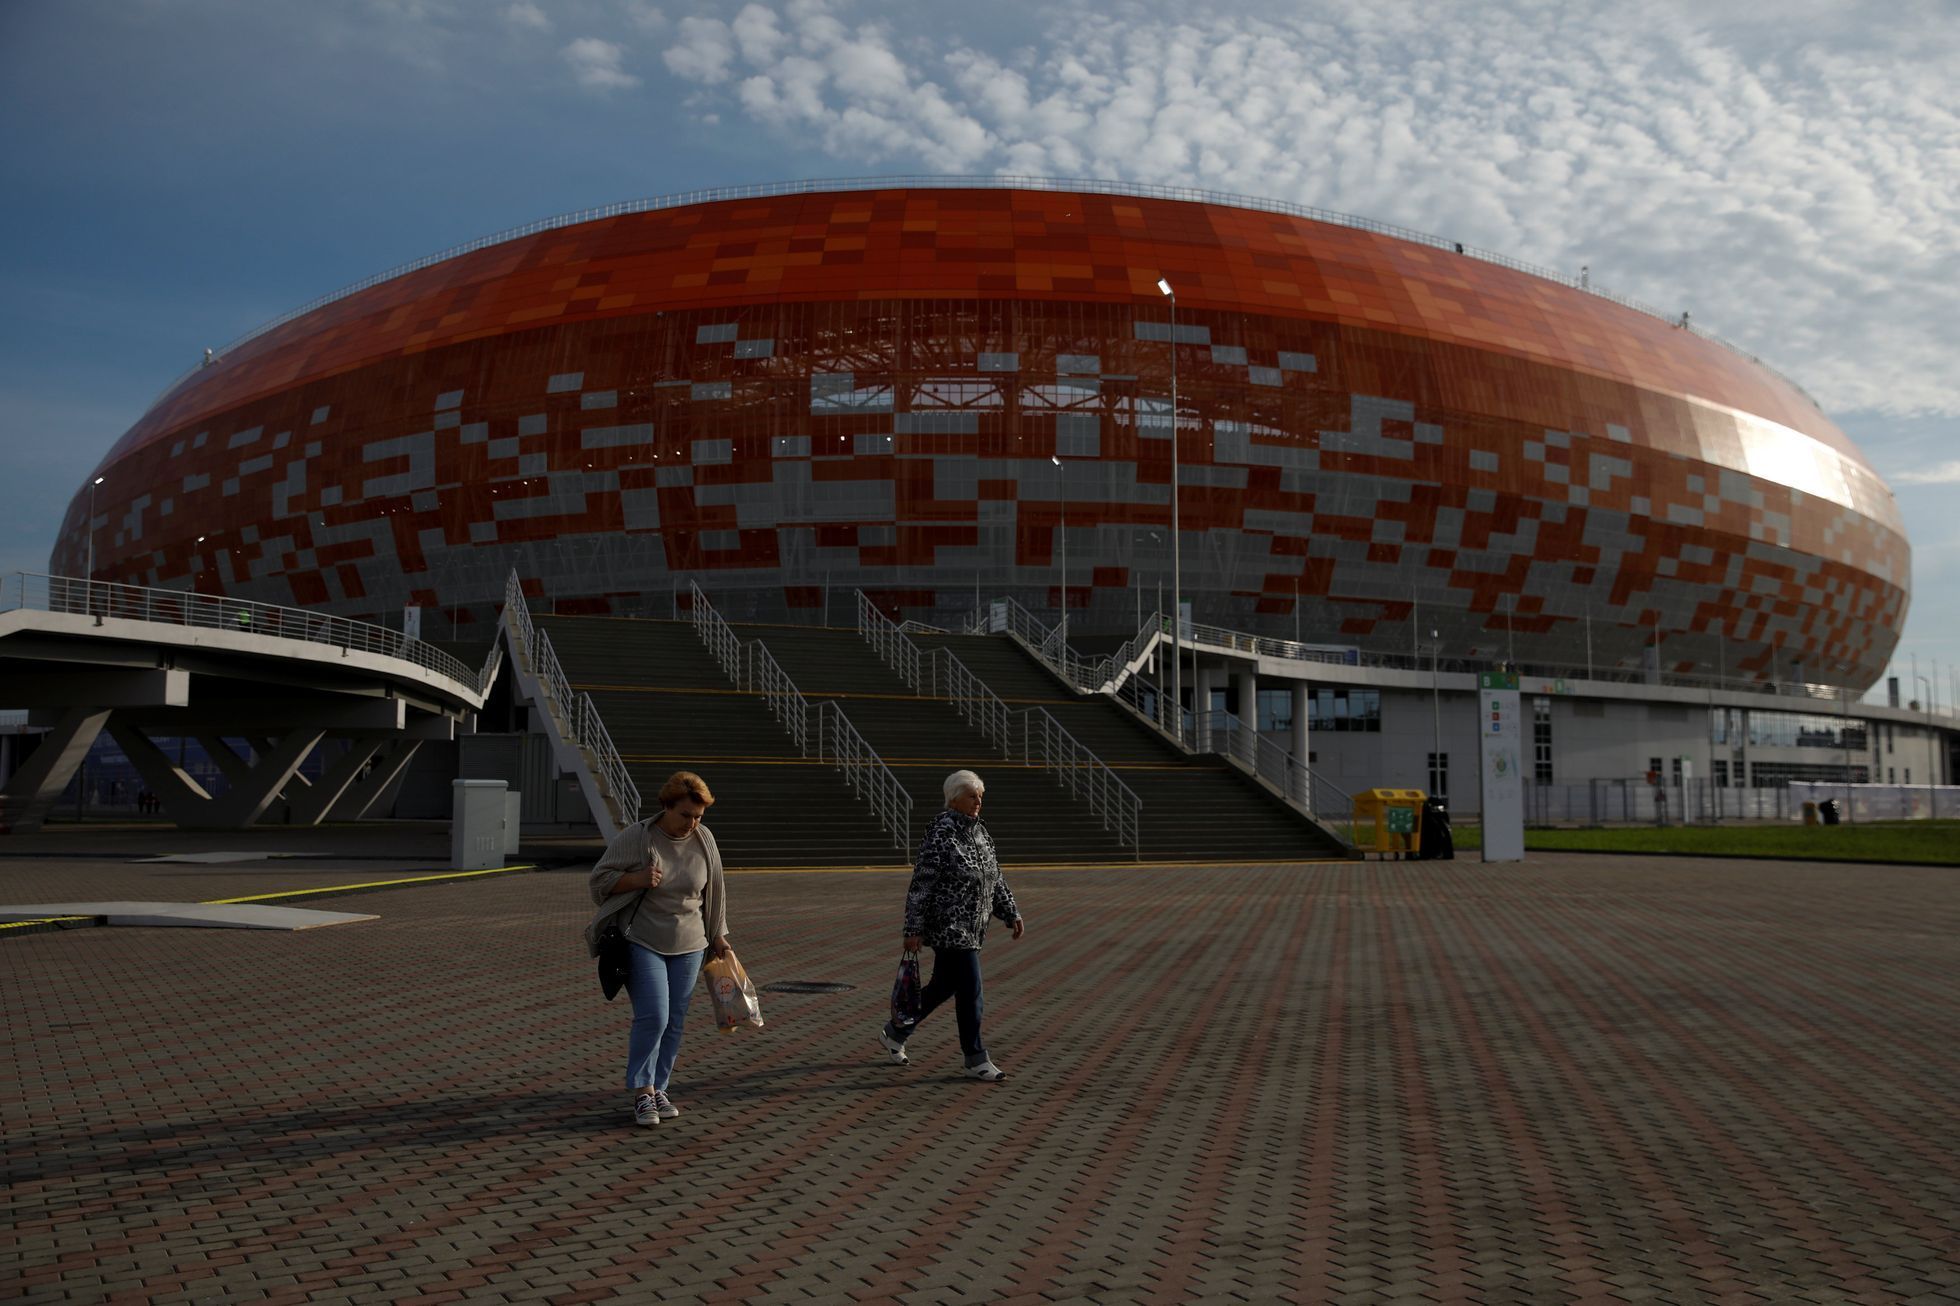 Stadiony pro MS 2018: Mordovia aréna v Saransku